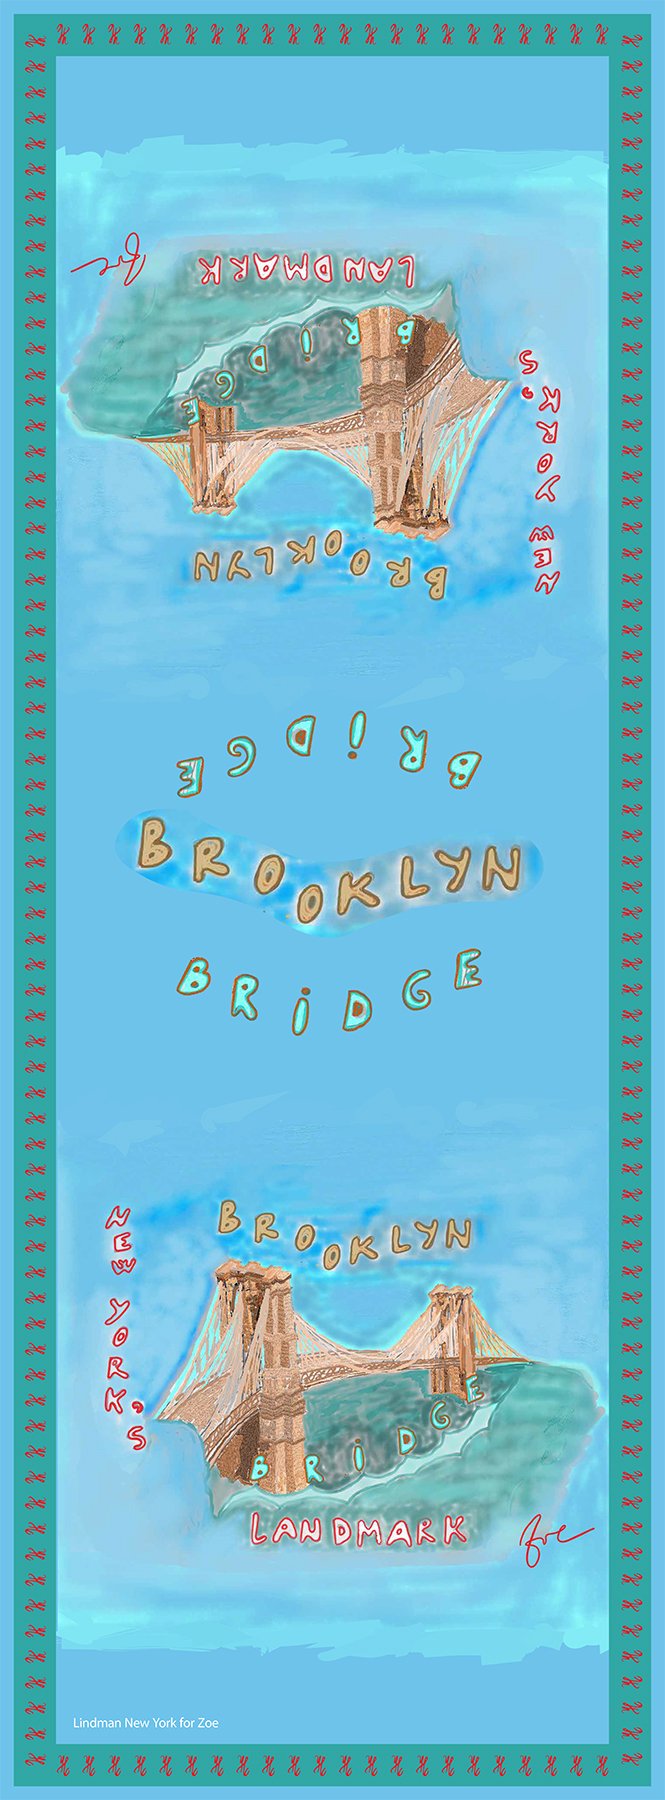 5-14-brookyln-bridge-teal.jpg